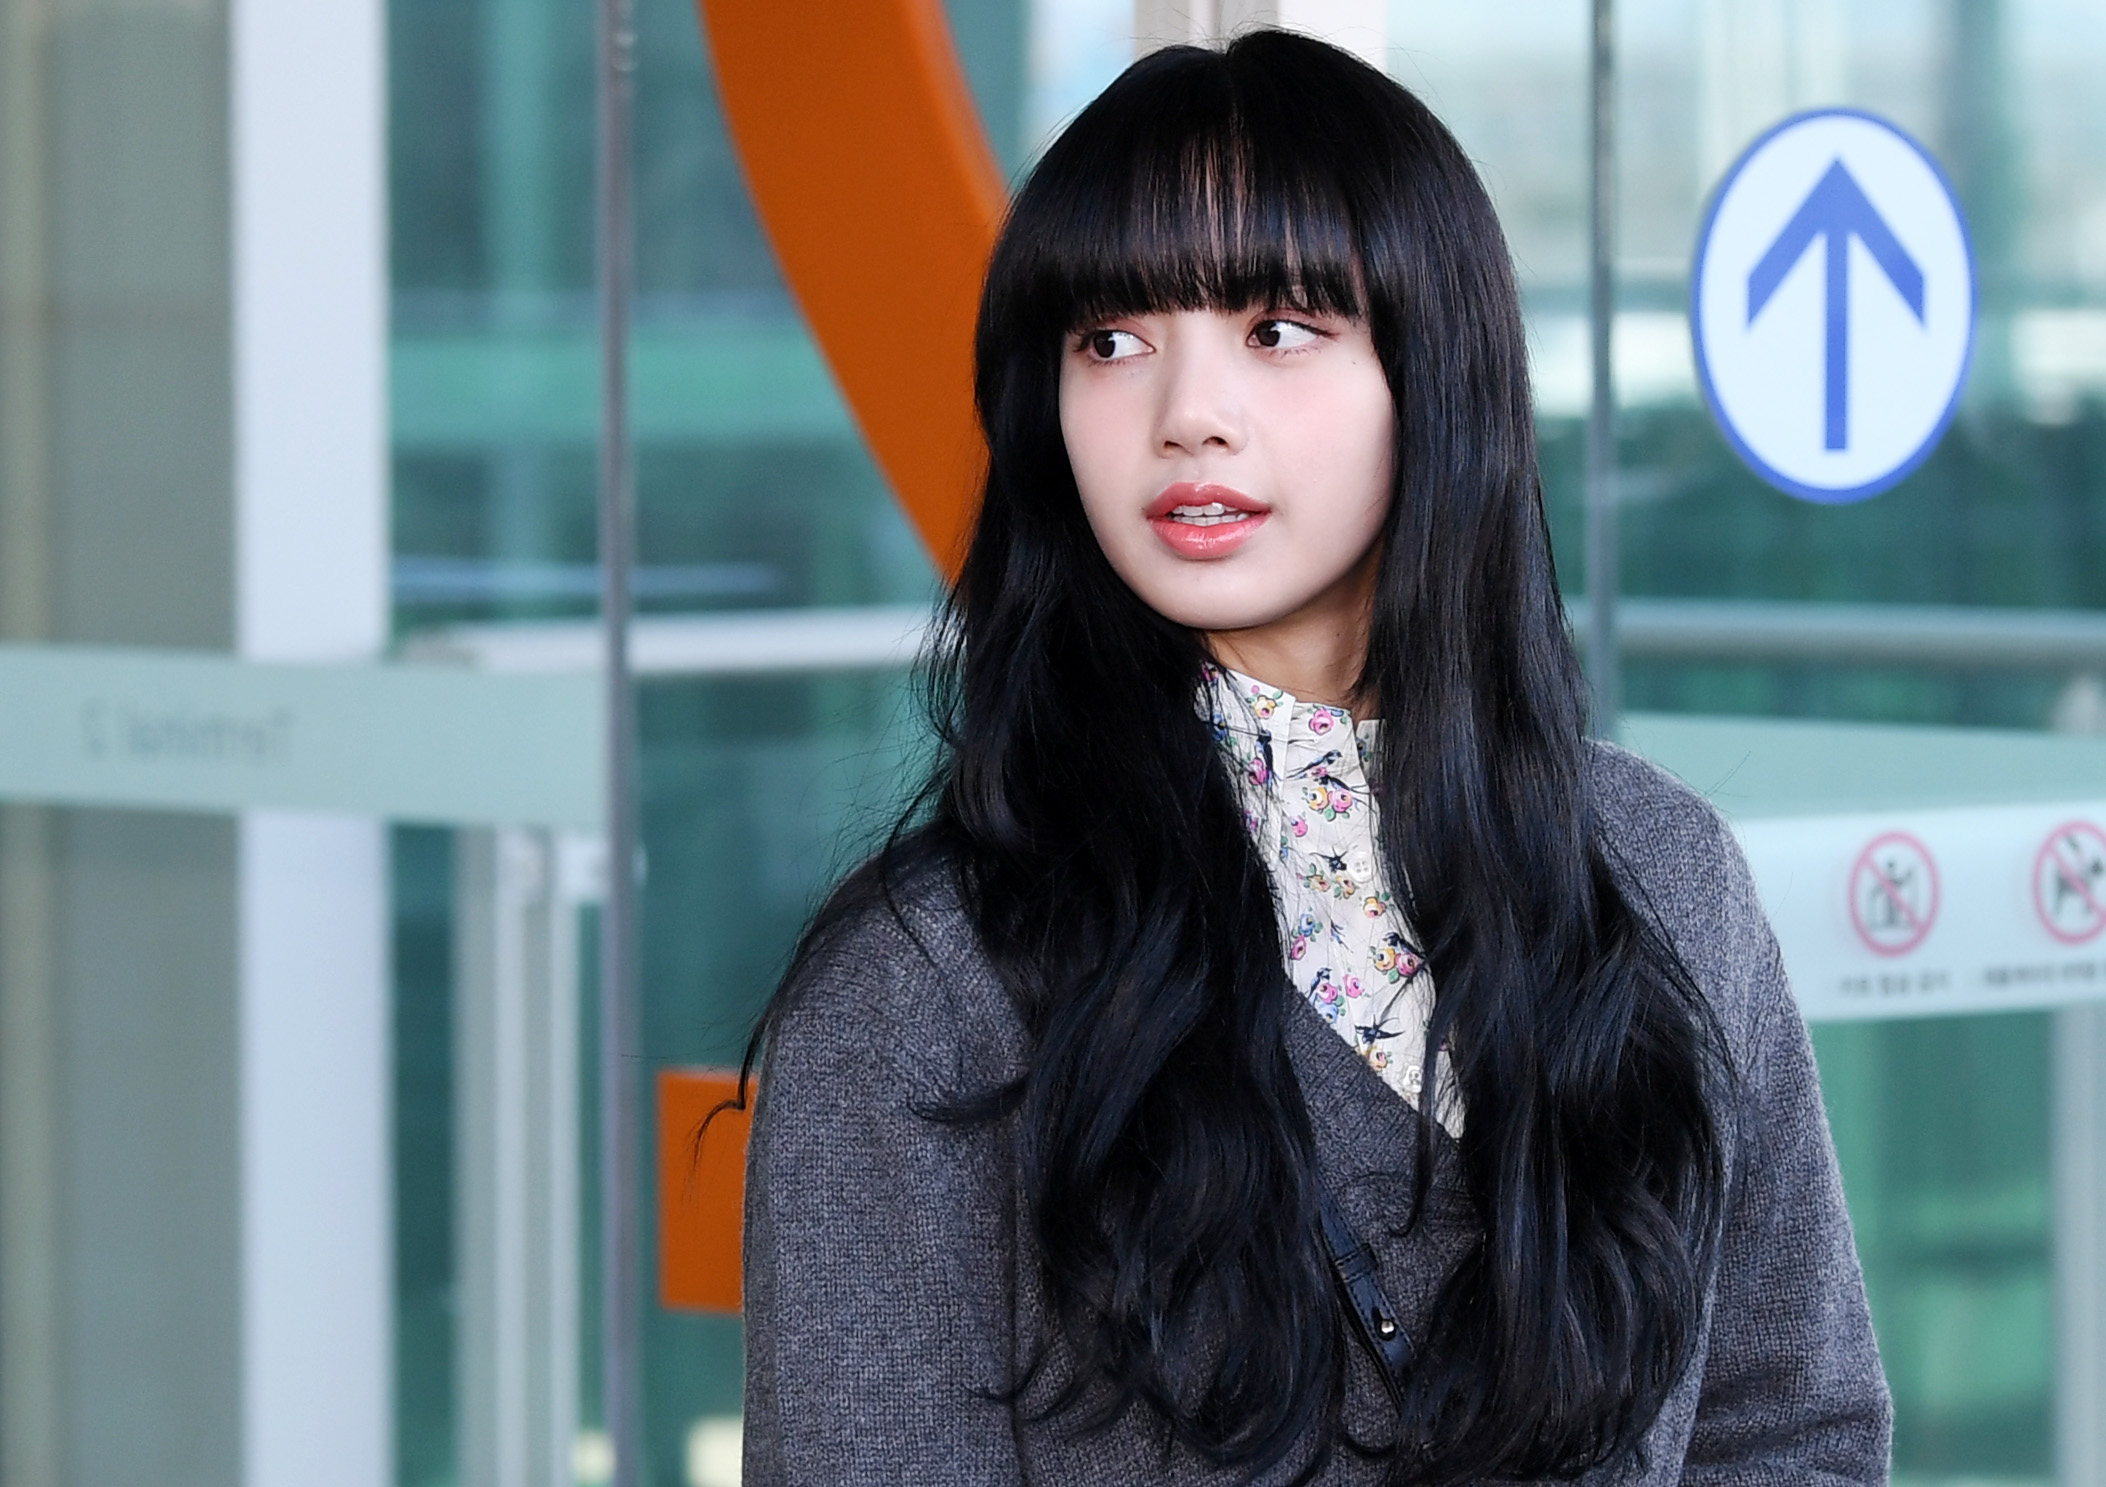 Lisa of BLACKPINK is seen upon departing at Incheon International Airport